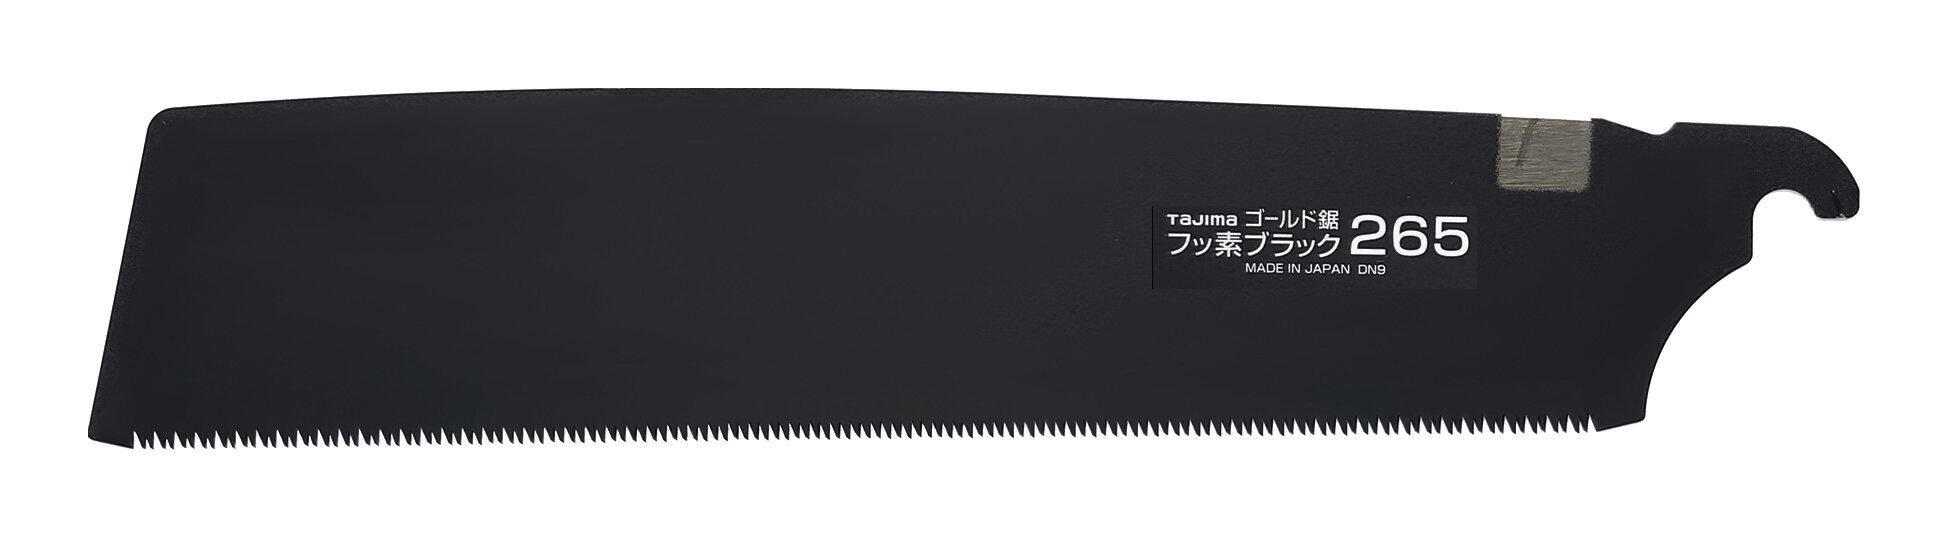 Tajima Handsäge, Sägeblatt 300 mm für Zugsäge Fluro Coat Black